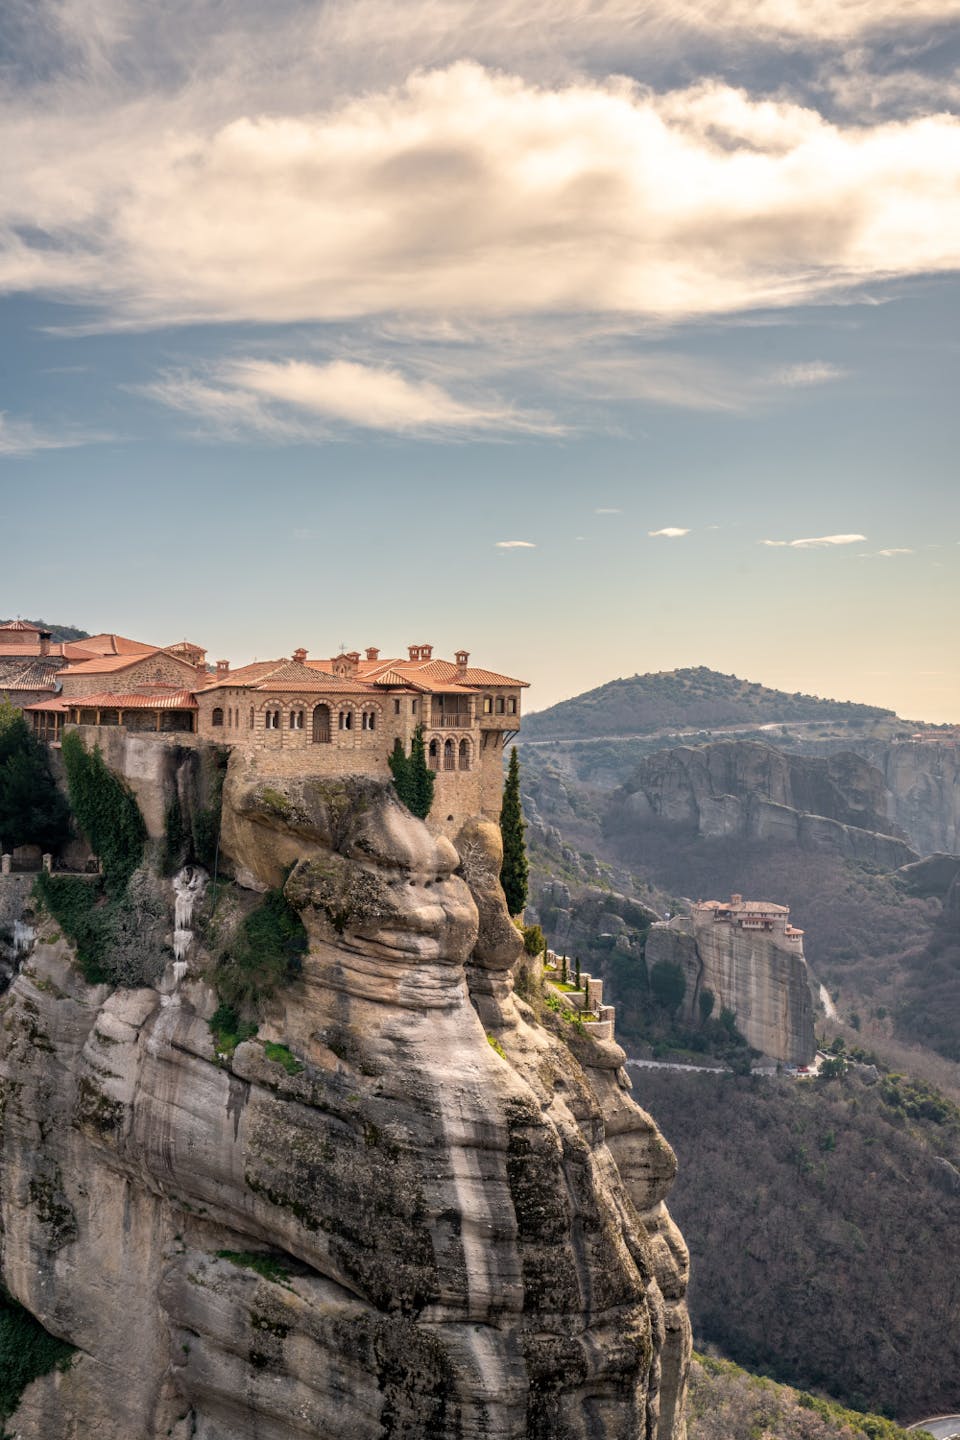 The monasteries of Meteora